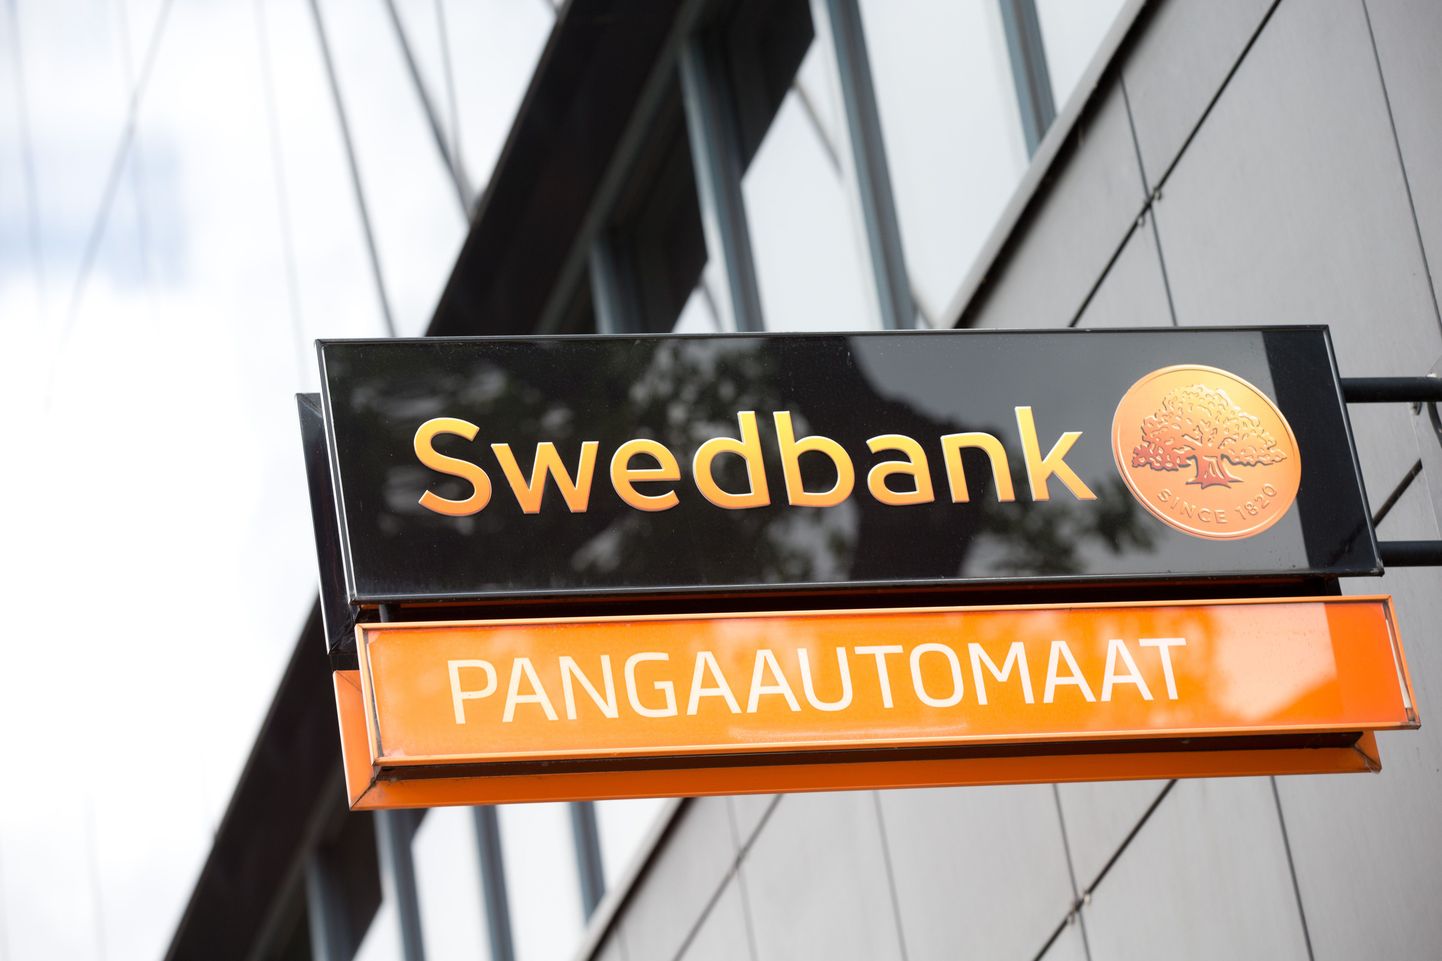 Swedbank